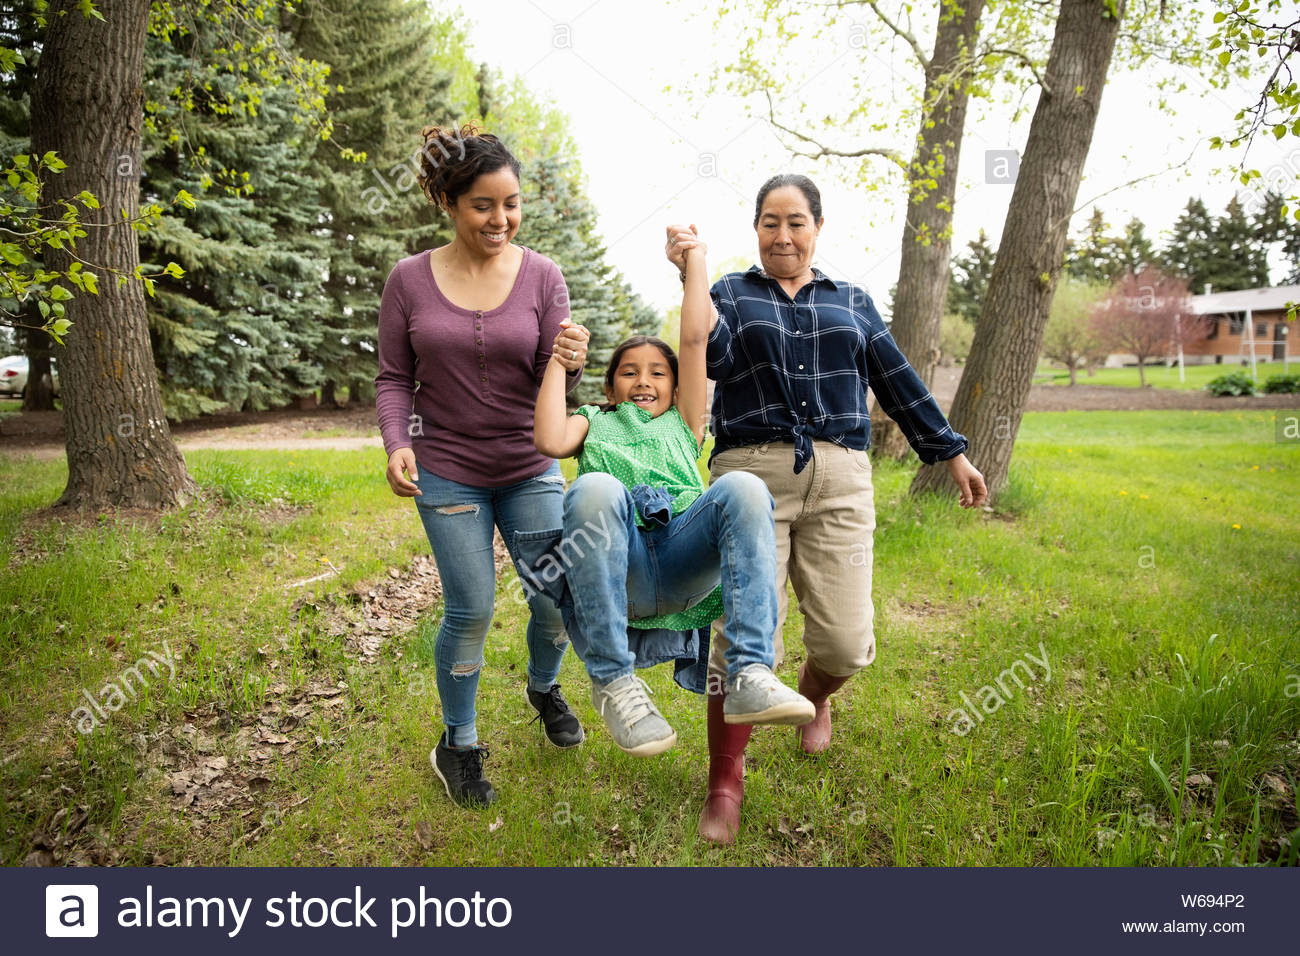 Playful multi-generation women in backyard Stock Photo